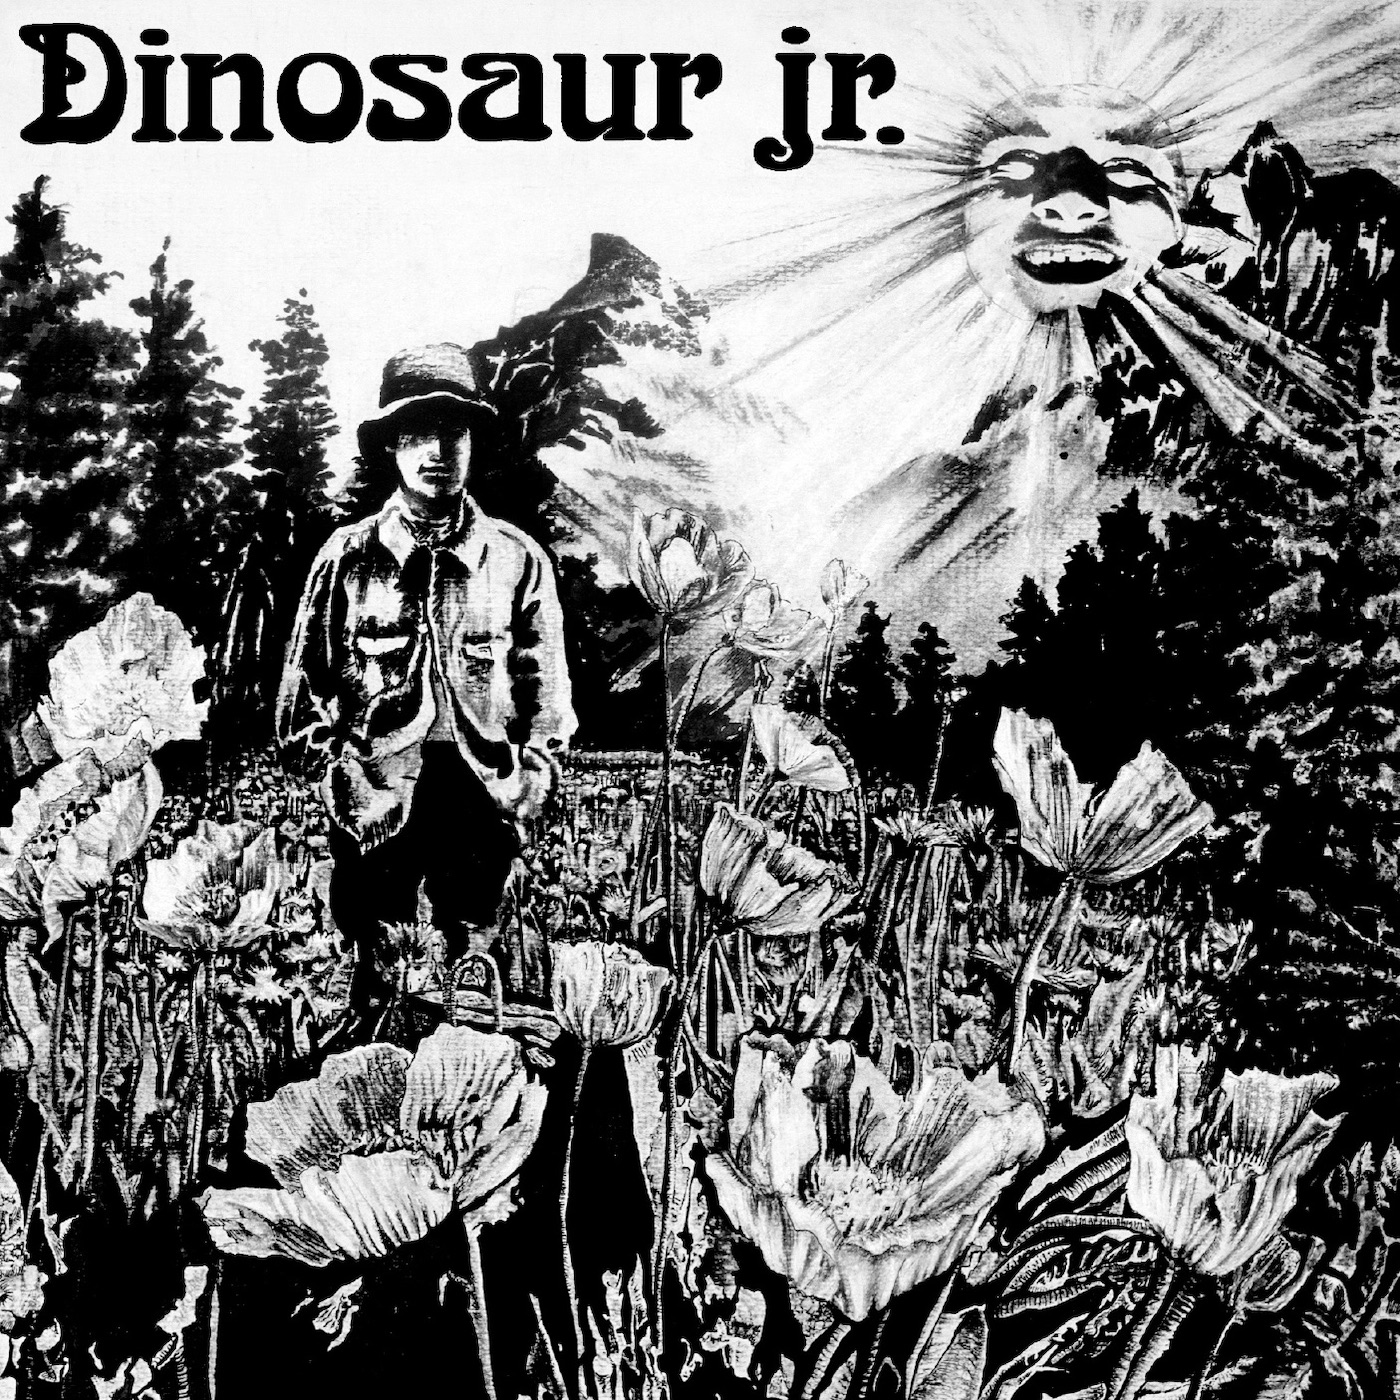 Dinosaur by Dinosaur Jr.